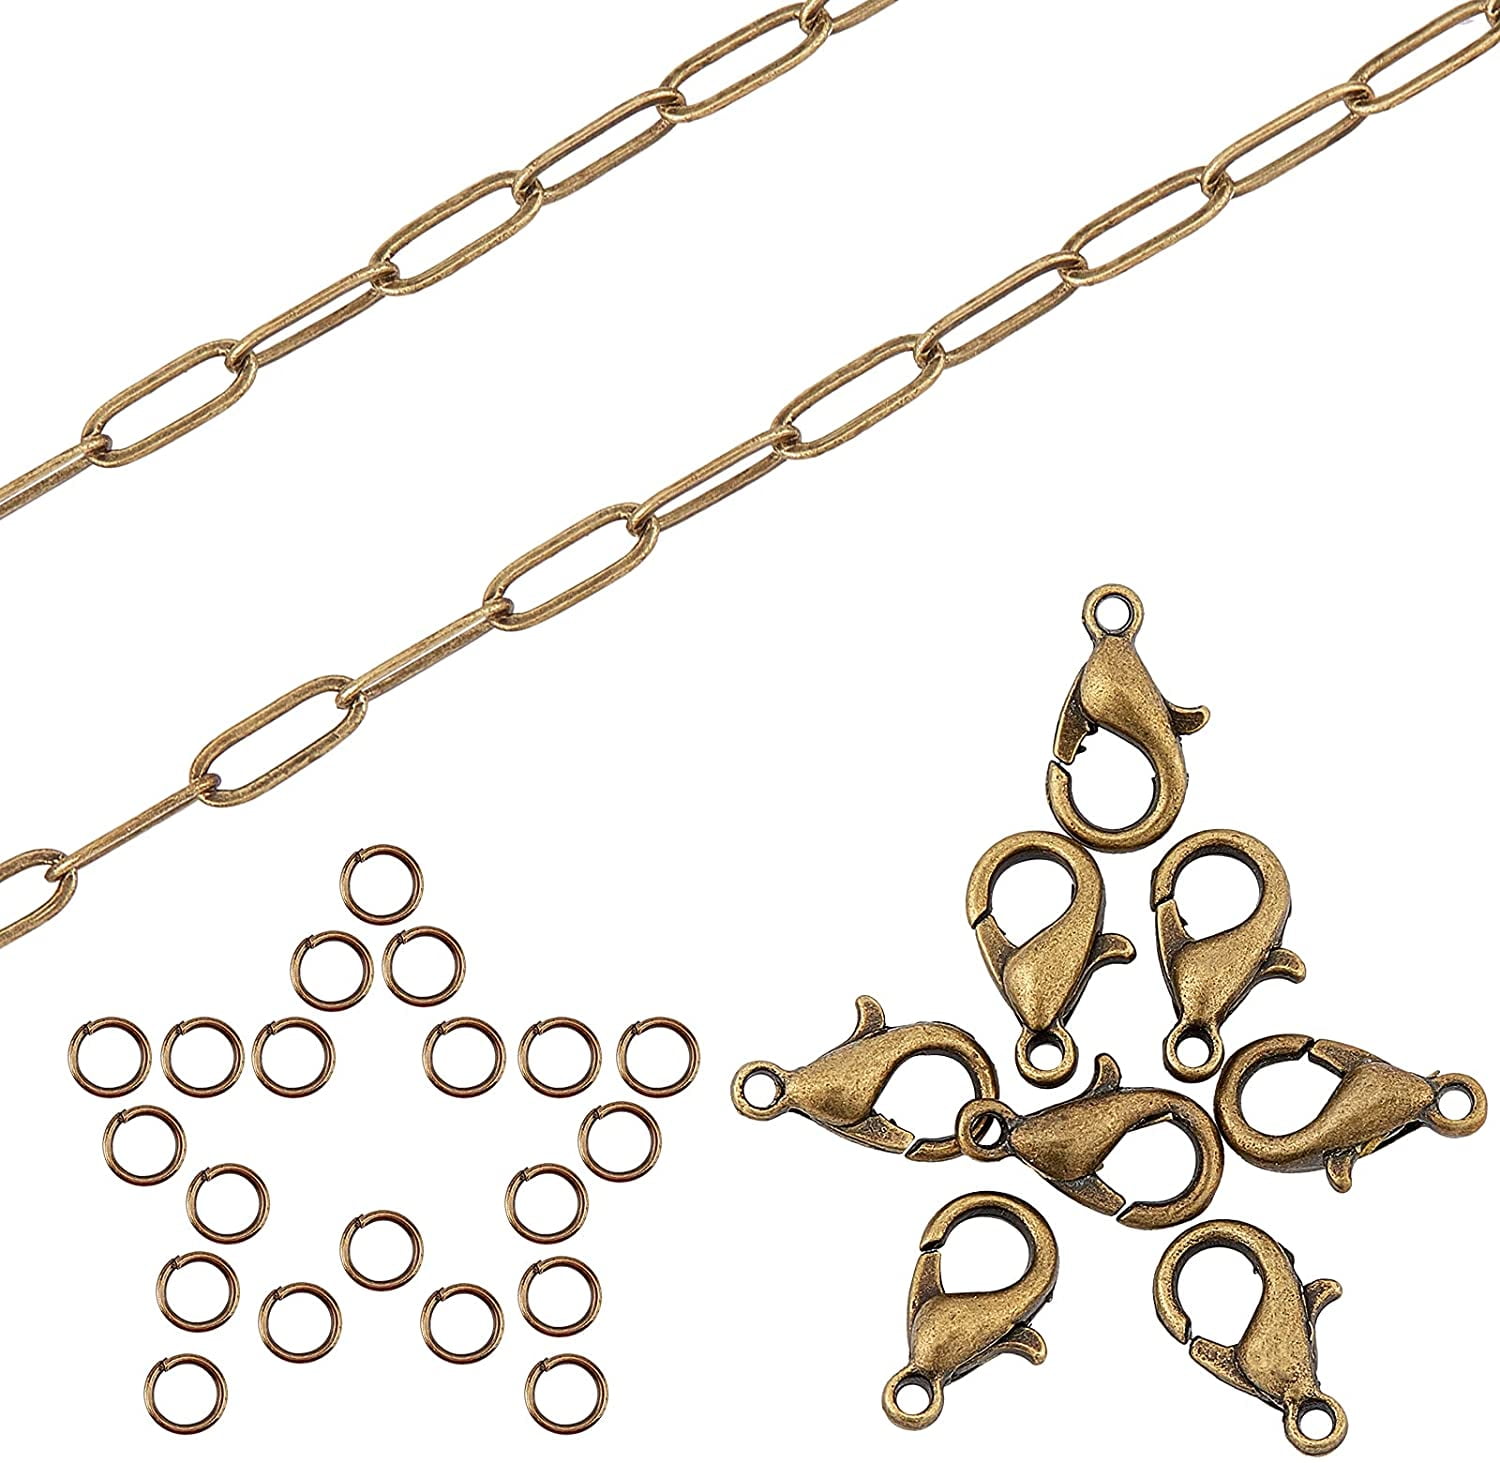 NUOLUX 100pcs Necklace Pendant Links Buckles DIY Pendant Clasps Jewelry Necklace  Making Supplies 